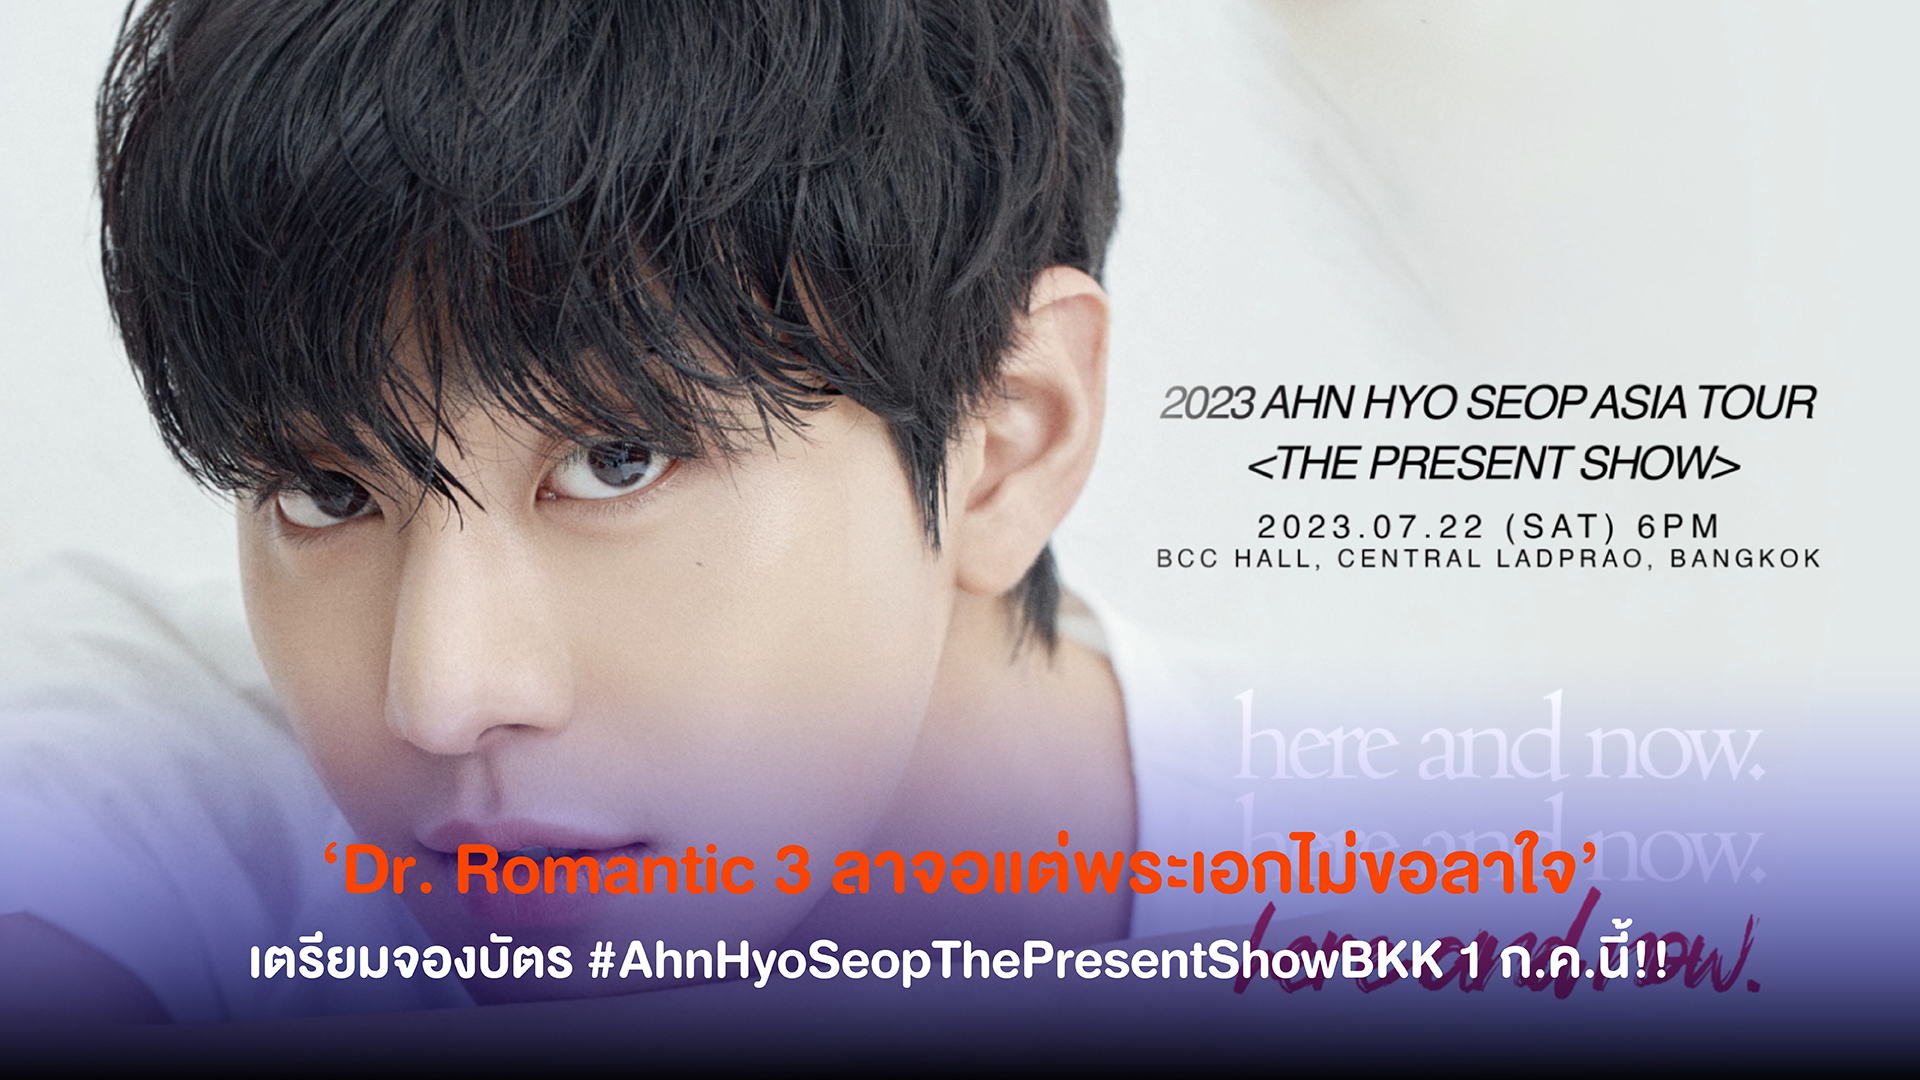 Dr. Romantic 3 ลาจอแต่พระเอกไม่ขอลาใจ ‘อันฮโยซอบ’ คอนเฟิร์มเจอกันไทยแลนด์ เตรียมจองบัตร #AhnHyoSeopThePresentShowBKK 1 ก.ค.นี้!!